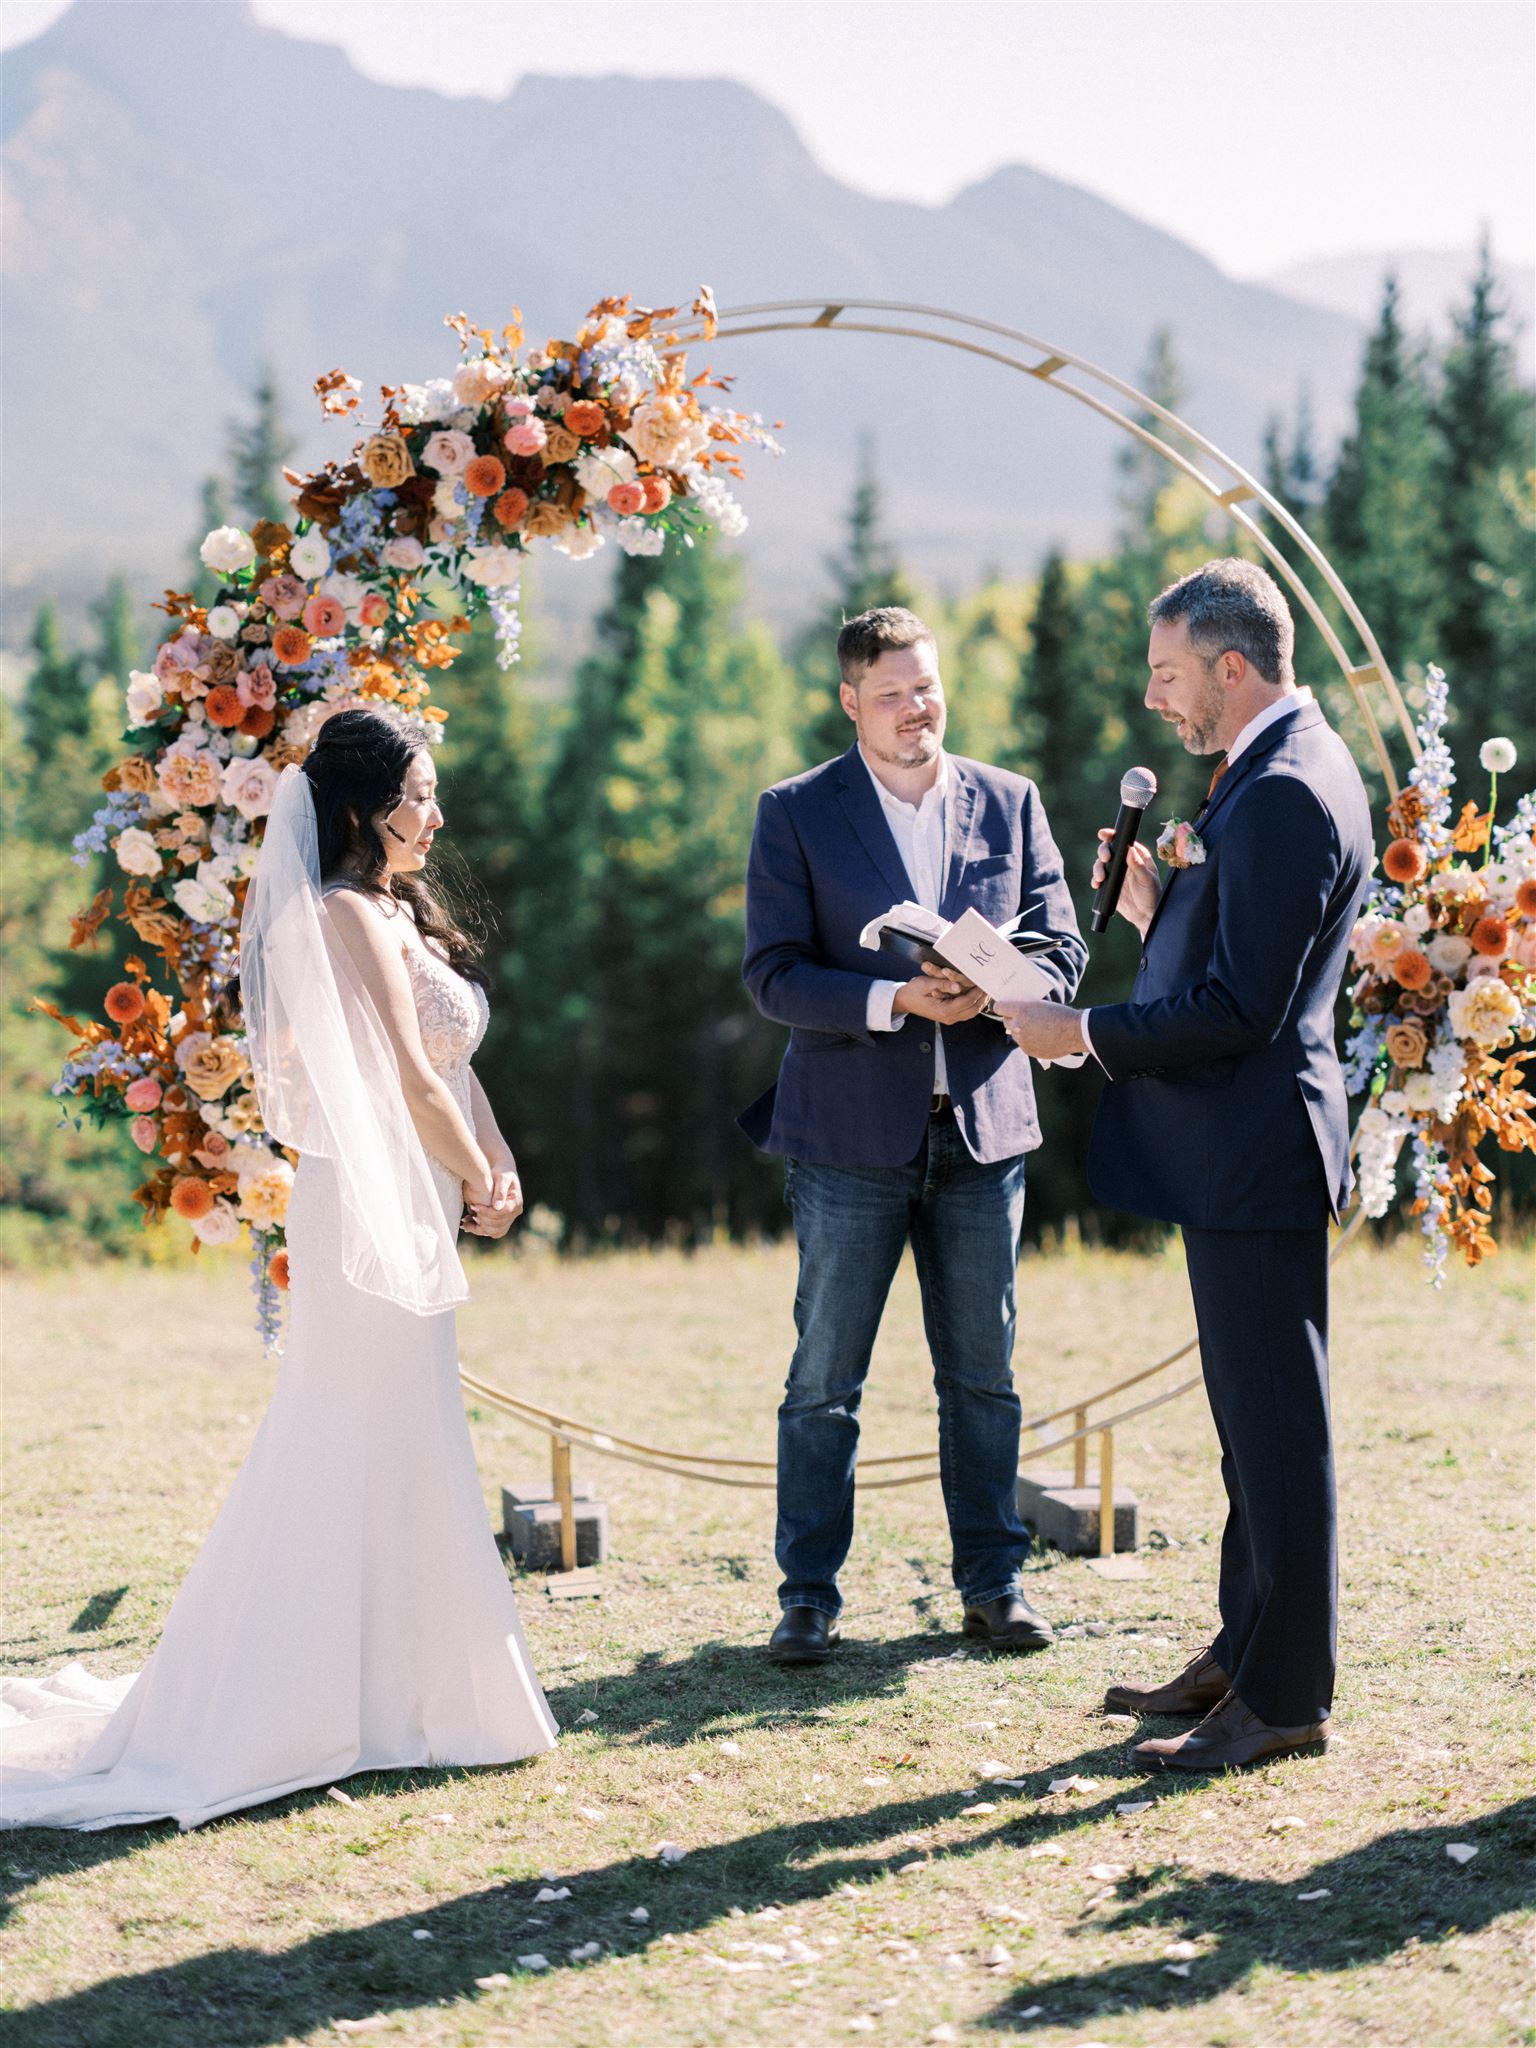 calgary wedding photographers, wedding ceremony, ceremony wedding arch, floral circle arch